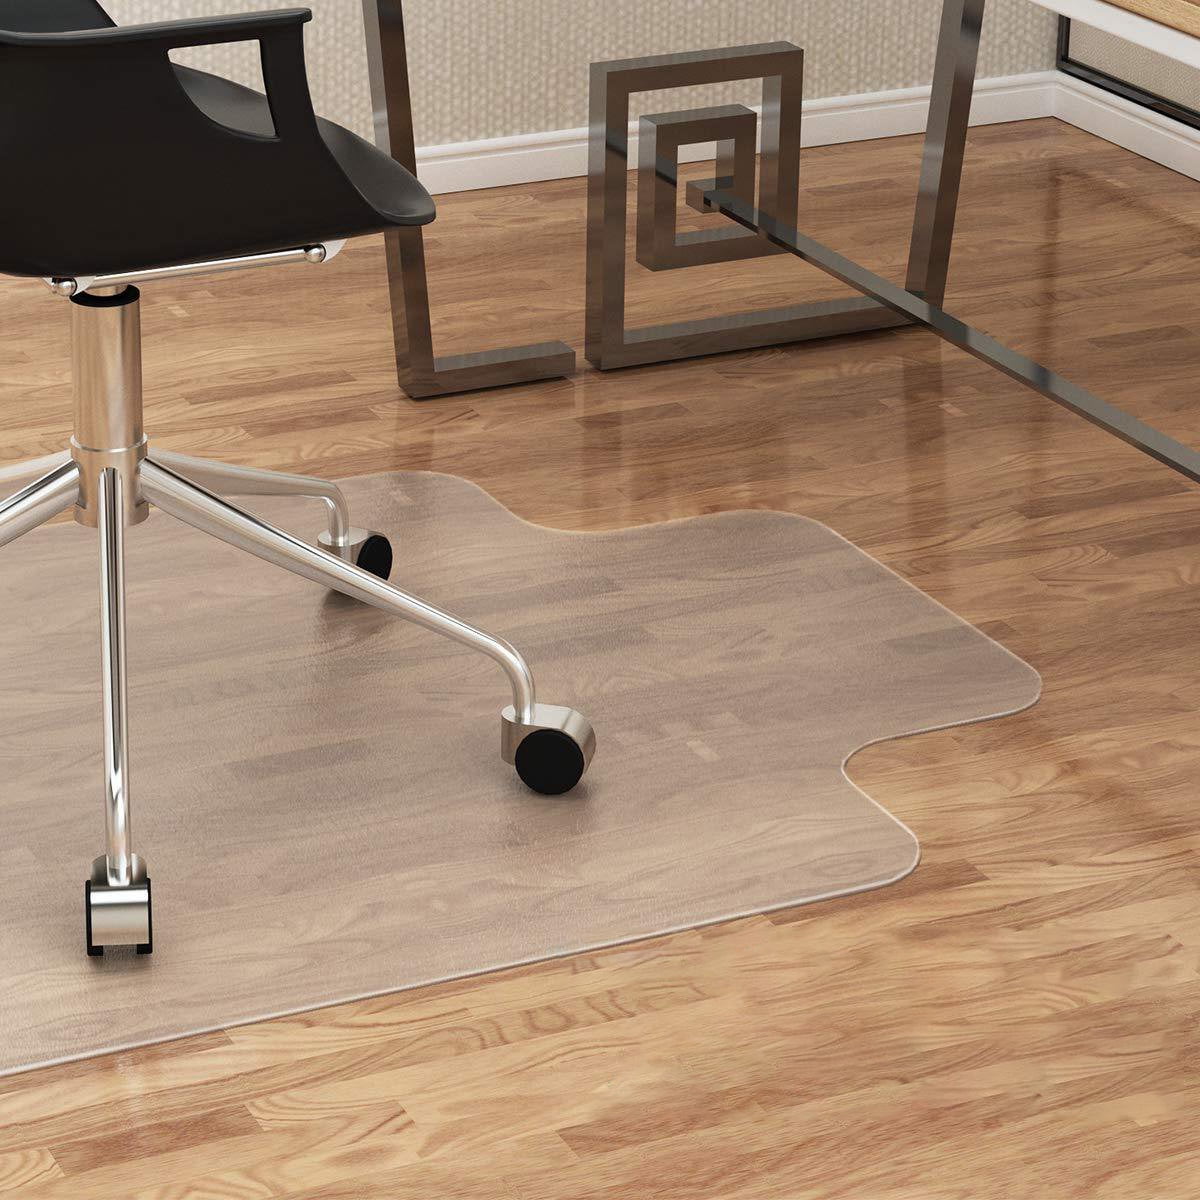 Computer Desk Chair Mat PVC Protector For Hardwood Floor Carpet Home Office US 